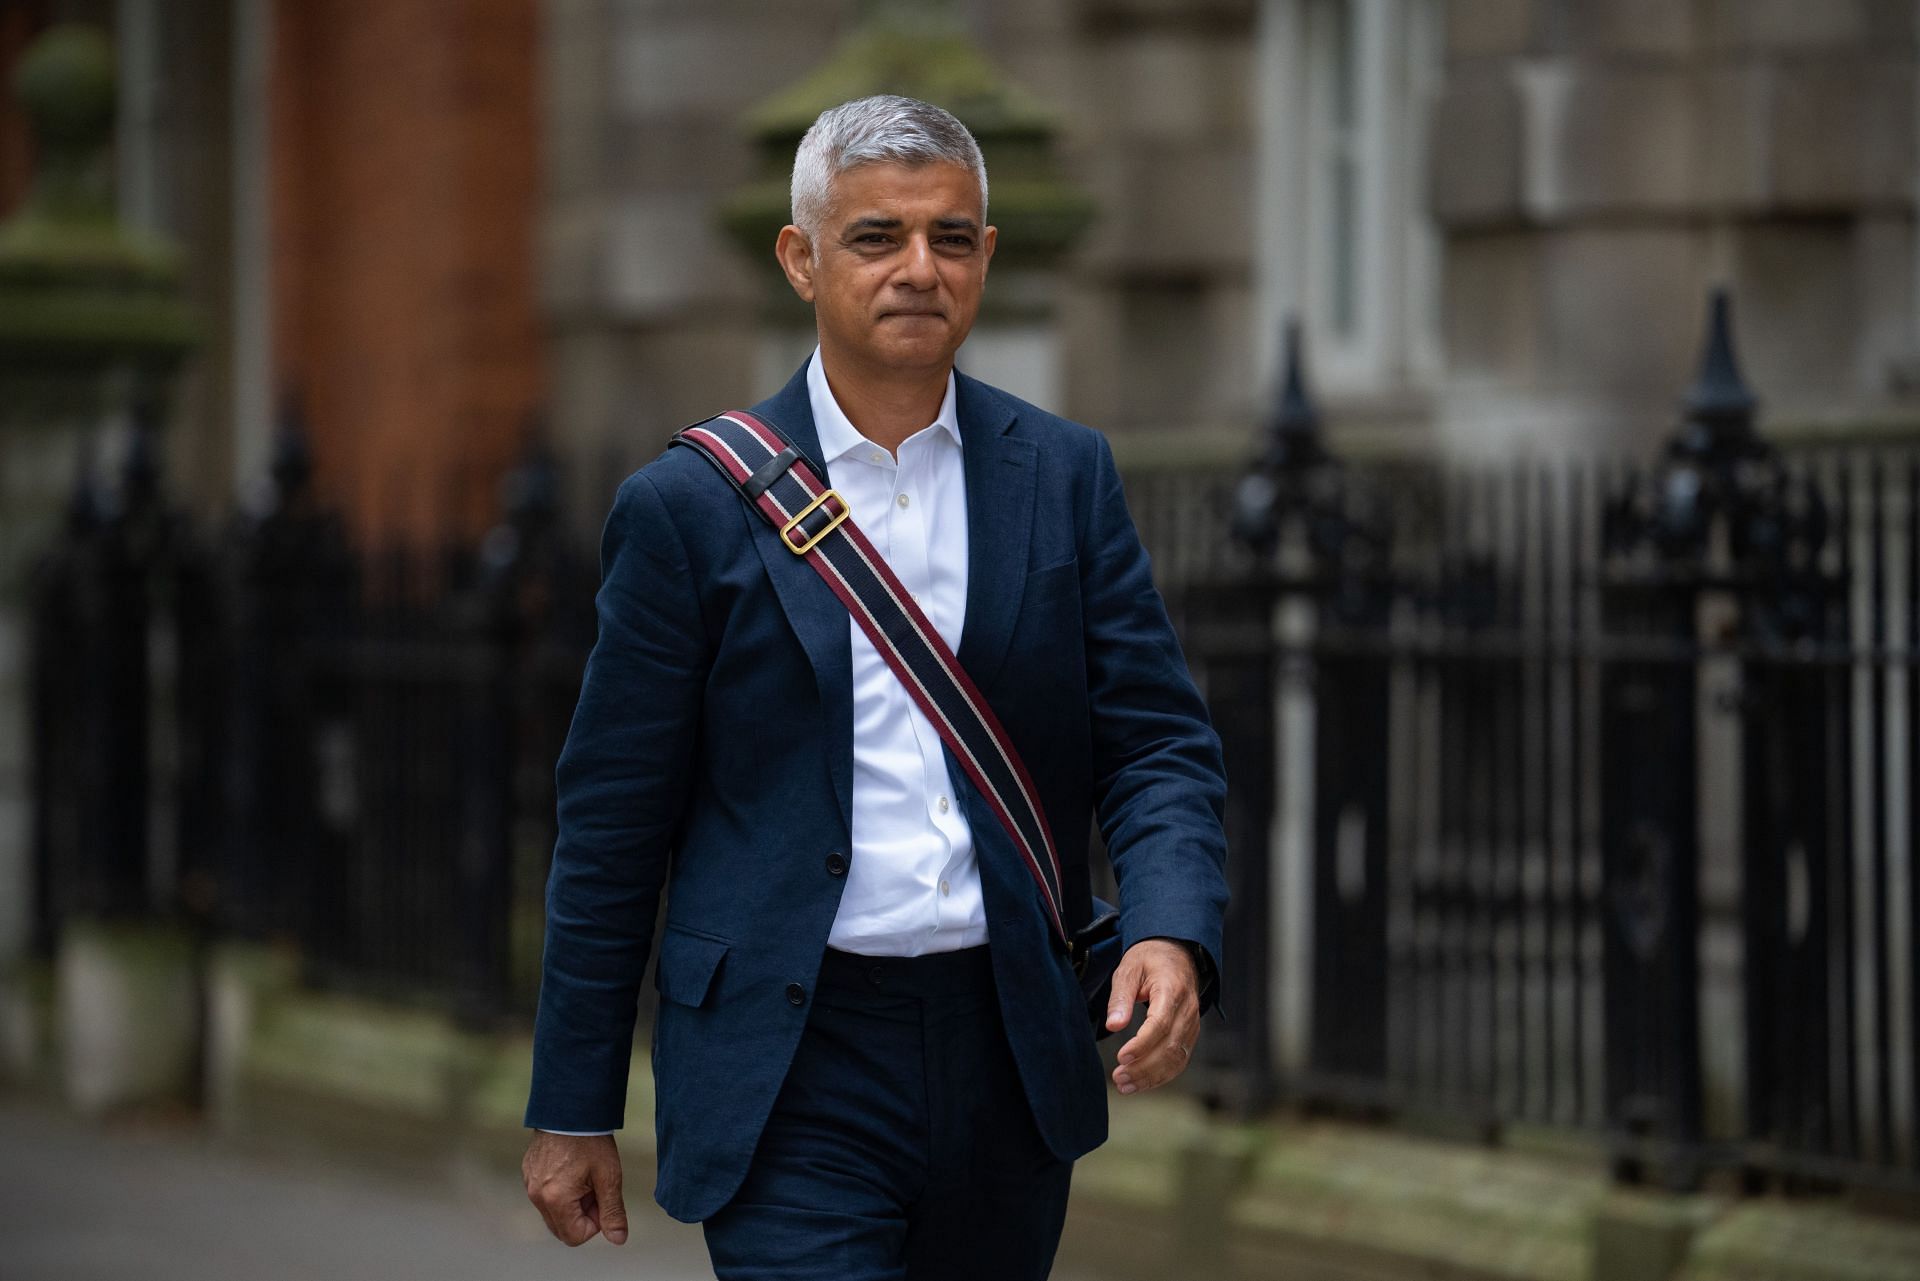 Sadiq Khan, Mayor of London (Image via Getty)